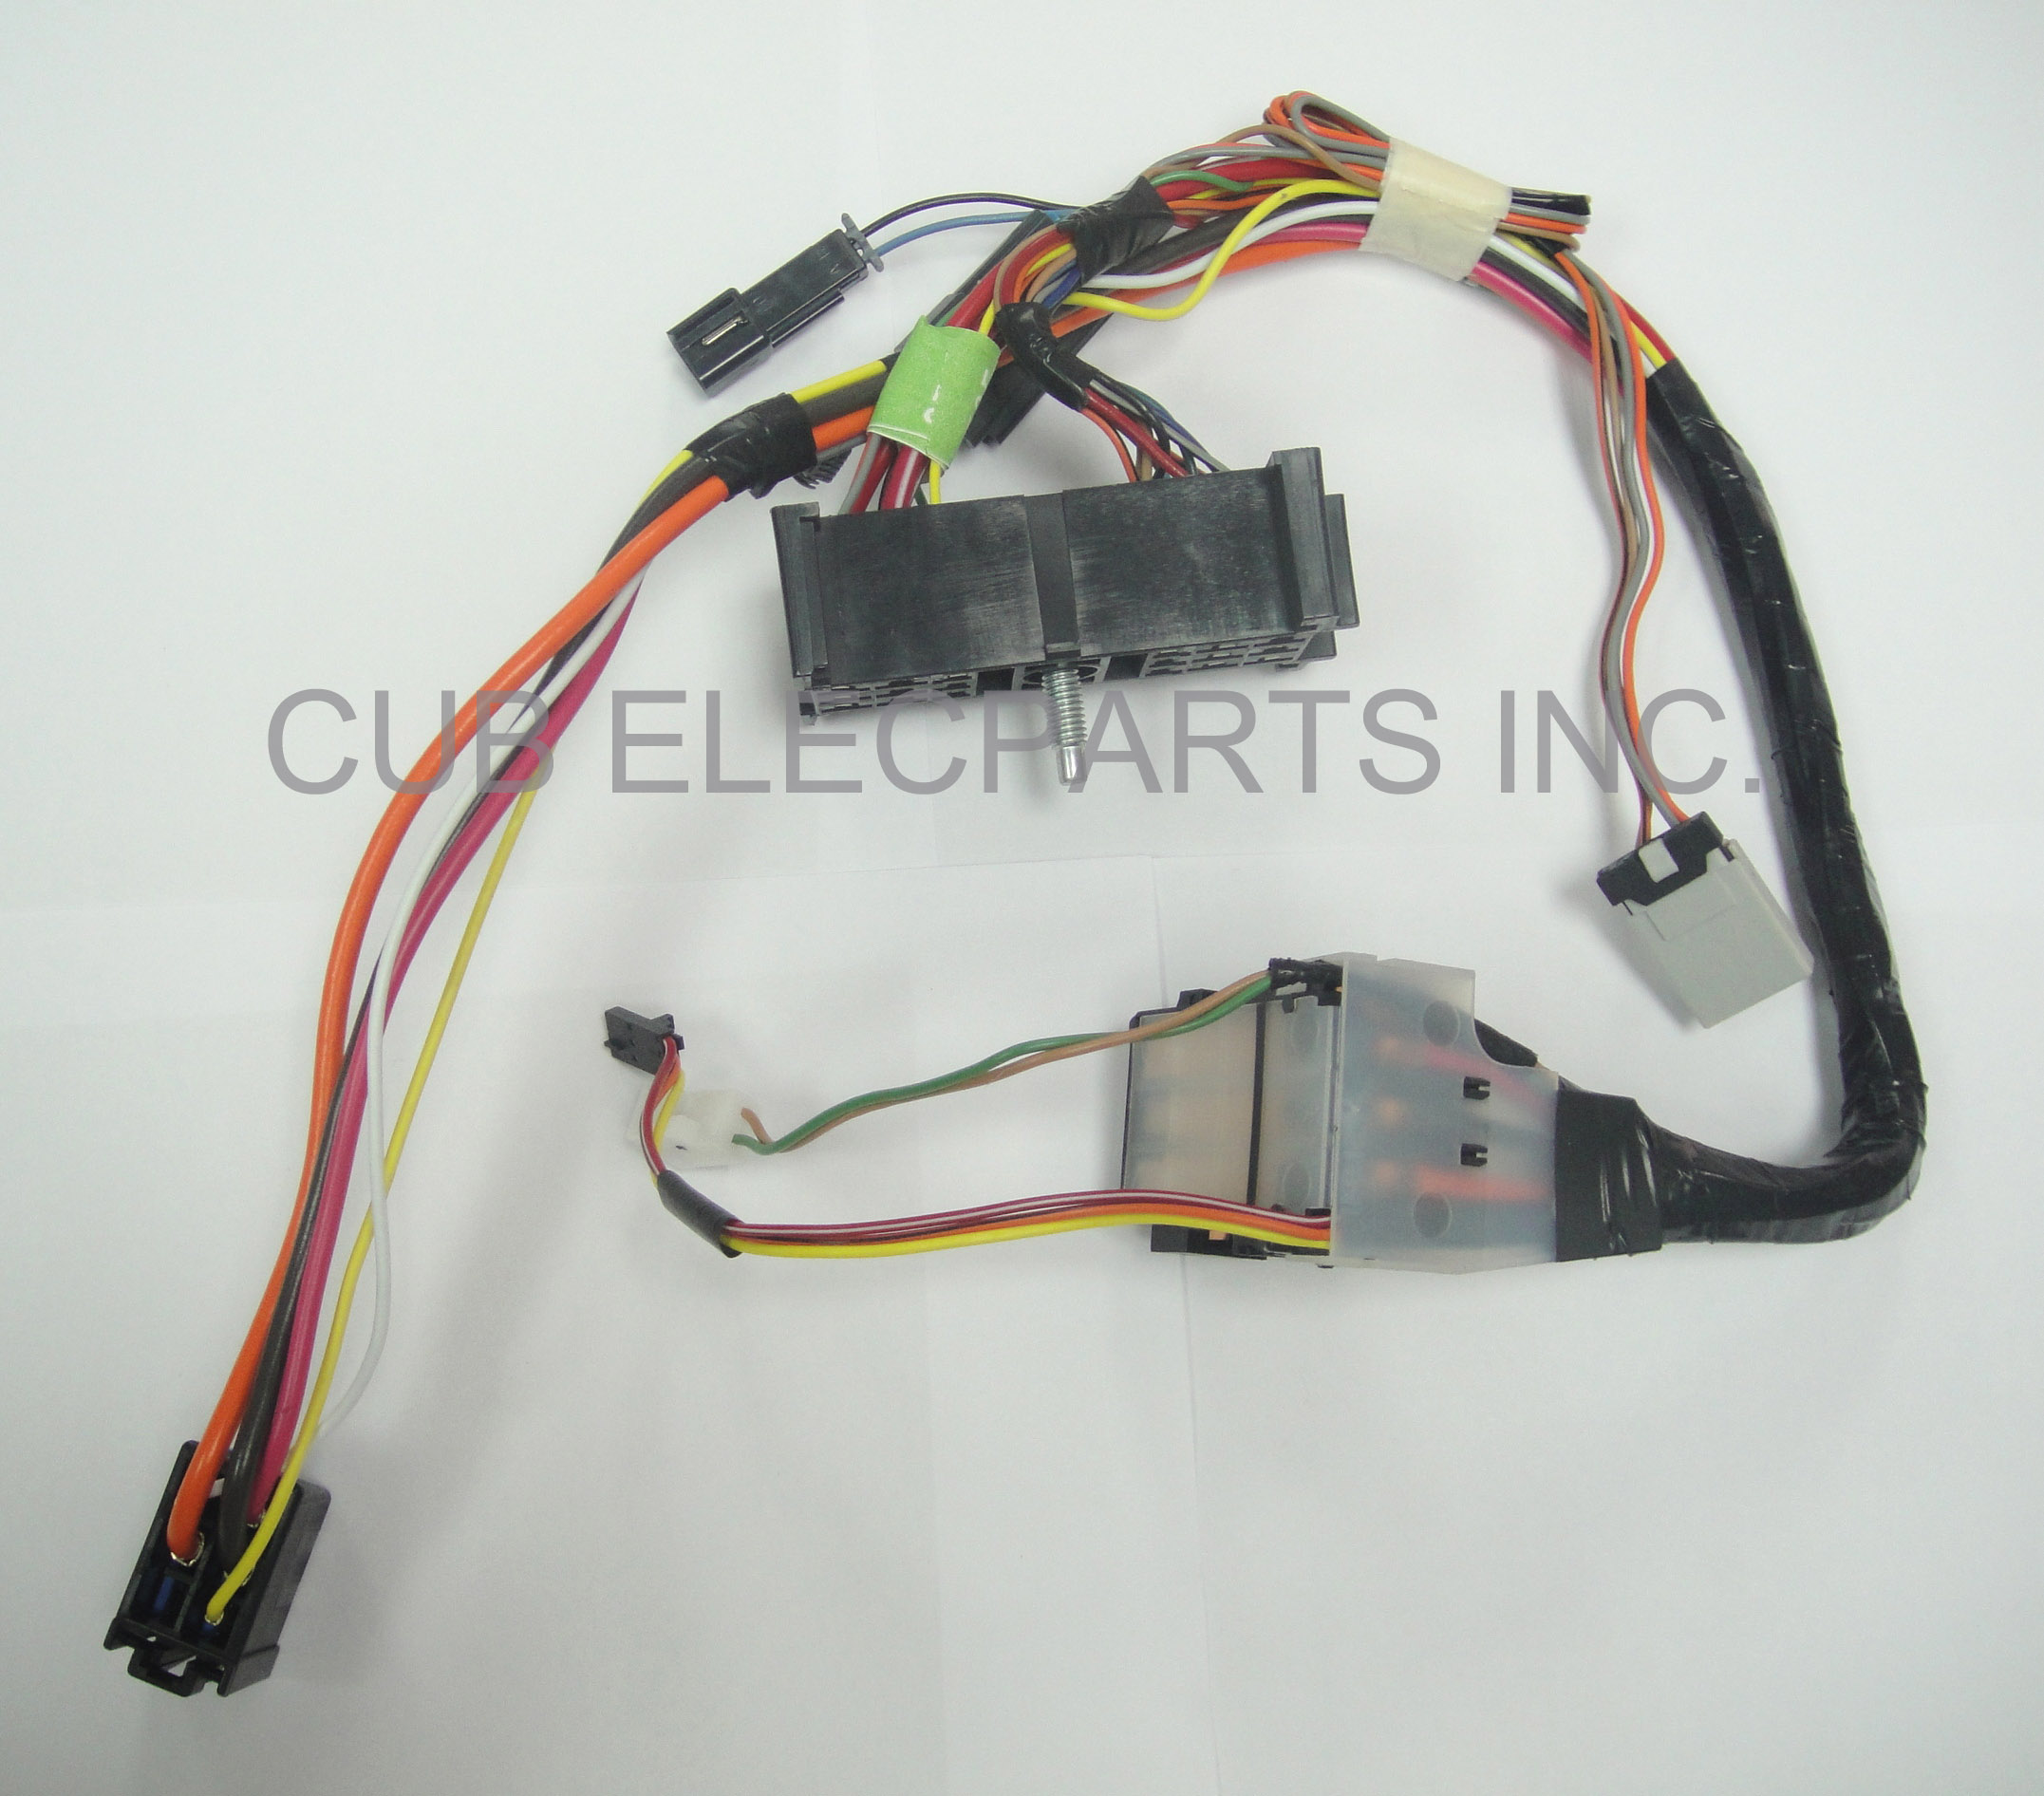 VS-37A166 / B010-137 Ignition Switch Wells:LS1074 Standard 